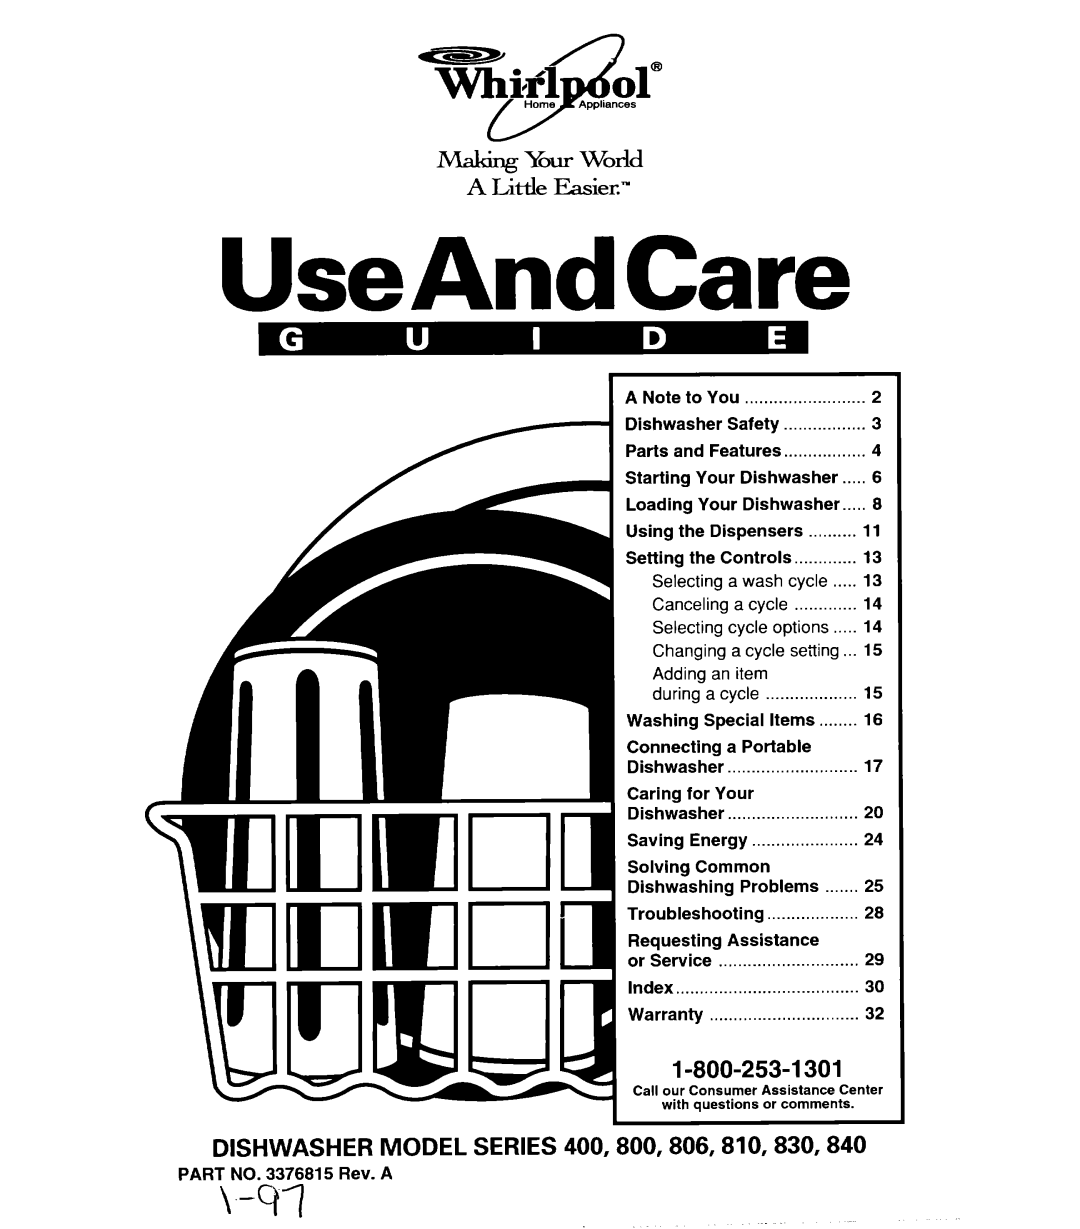 Whirlpool warranty Making your World A Little Easier, l-800-253-1301, DISHWASHER MODEL SERIES 400,800,806,810,830,840 